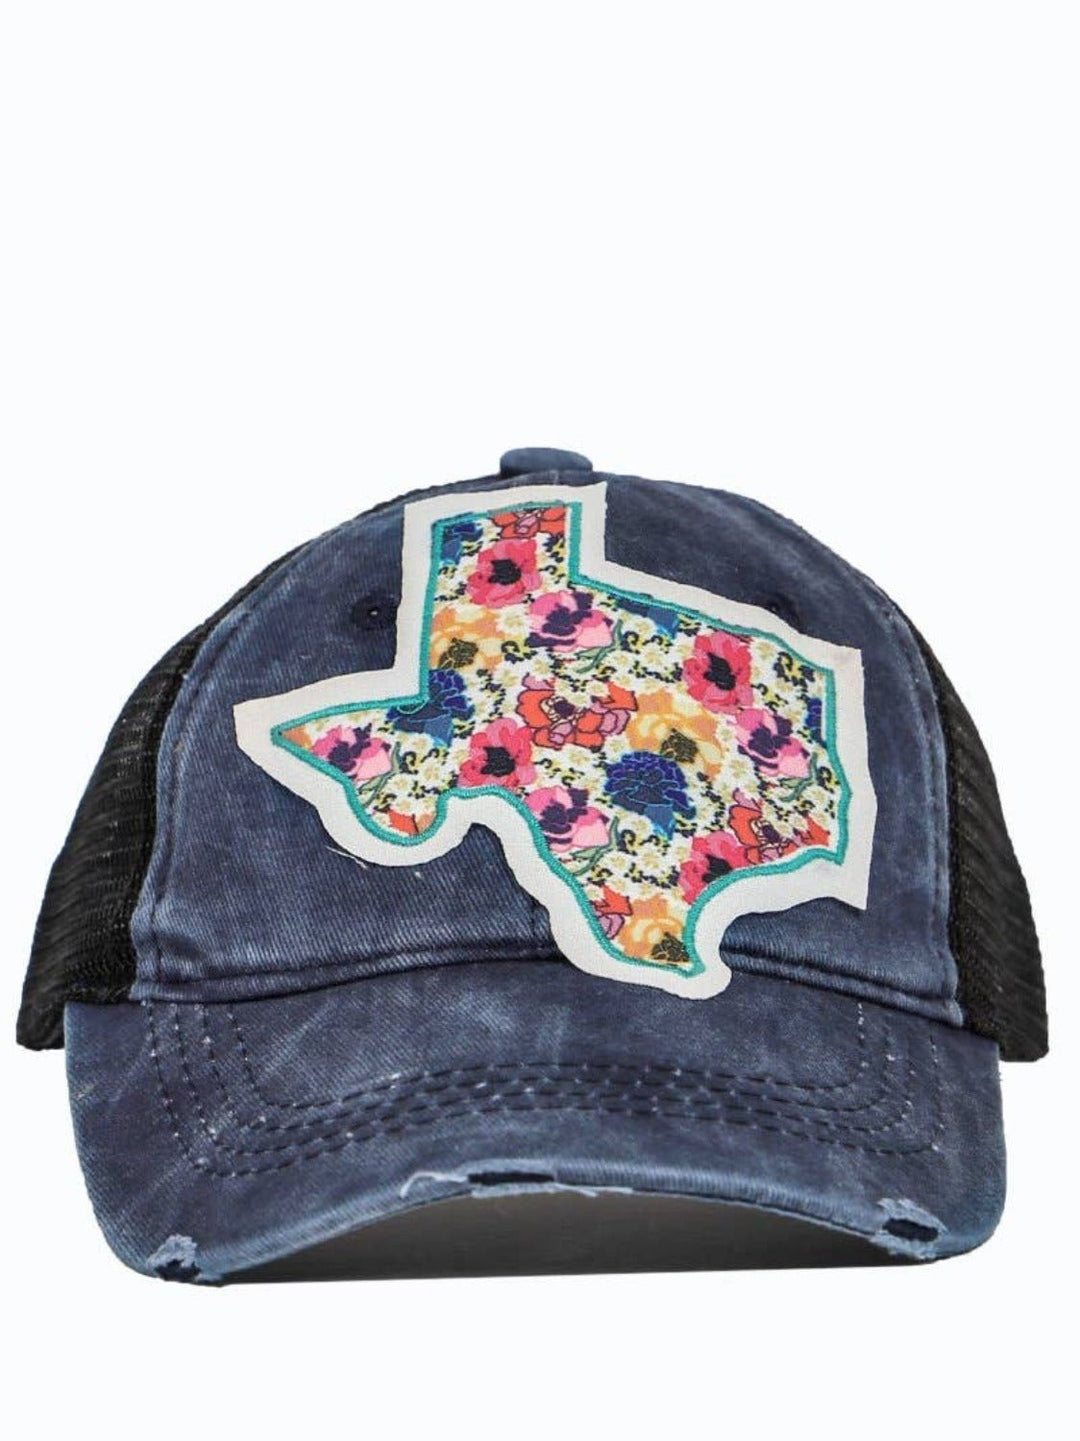 Vibrant Floral Texas Patch Navy and Black Mesh Hat - Lolo Viv Boutique